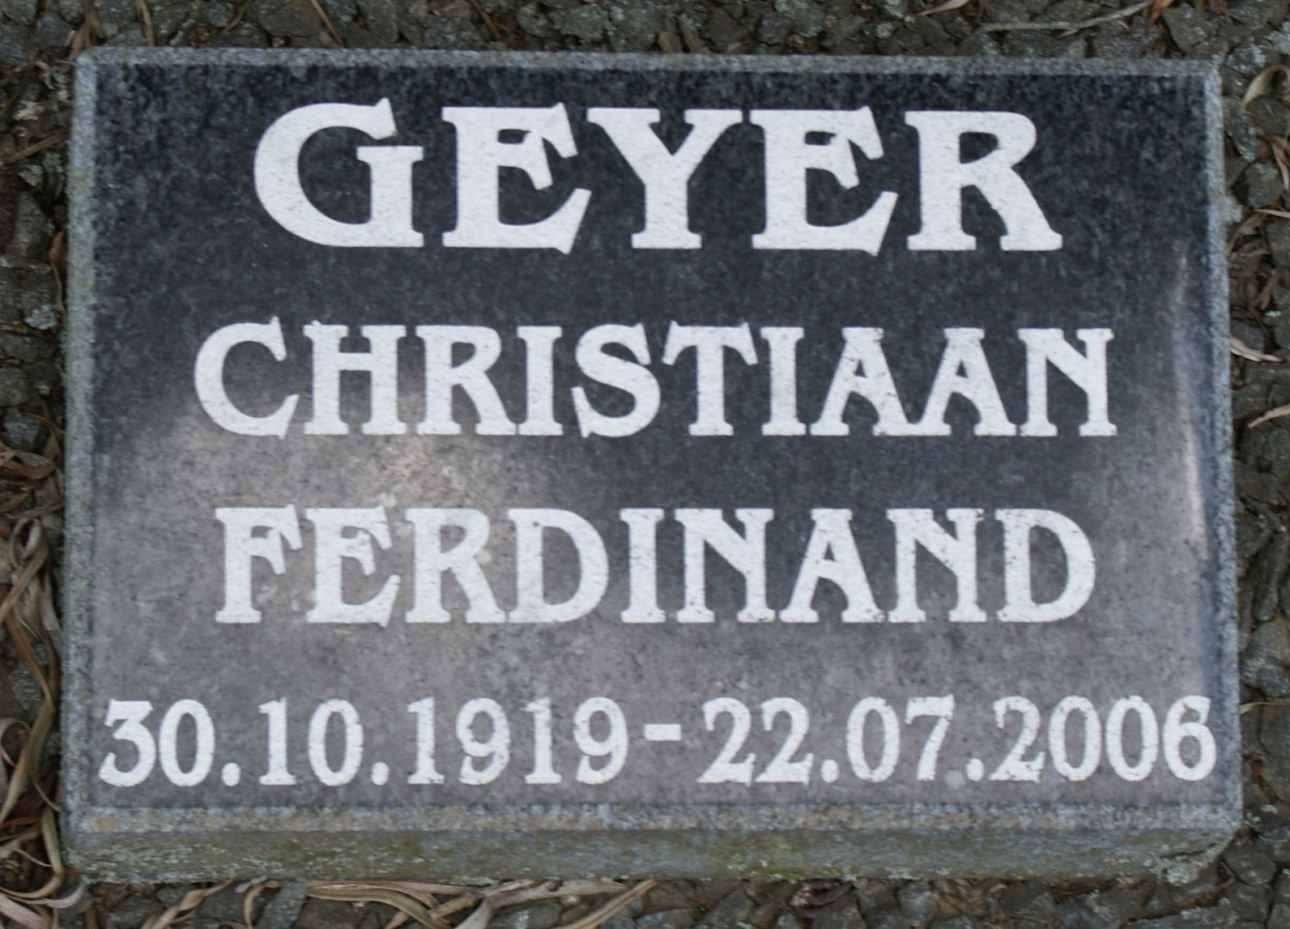 GEYER Christiaan Ferdinand 1919-2006